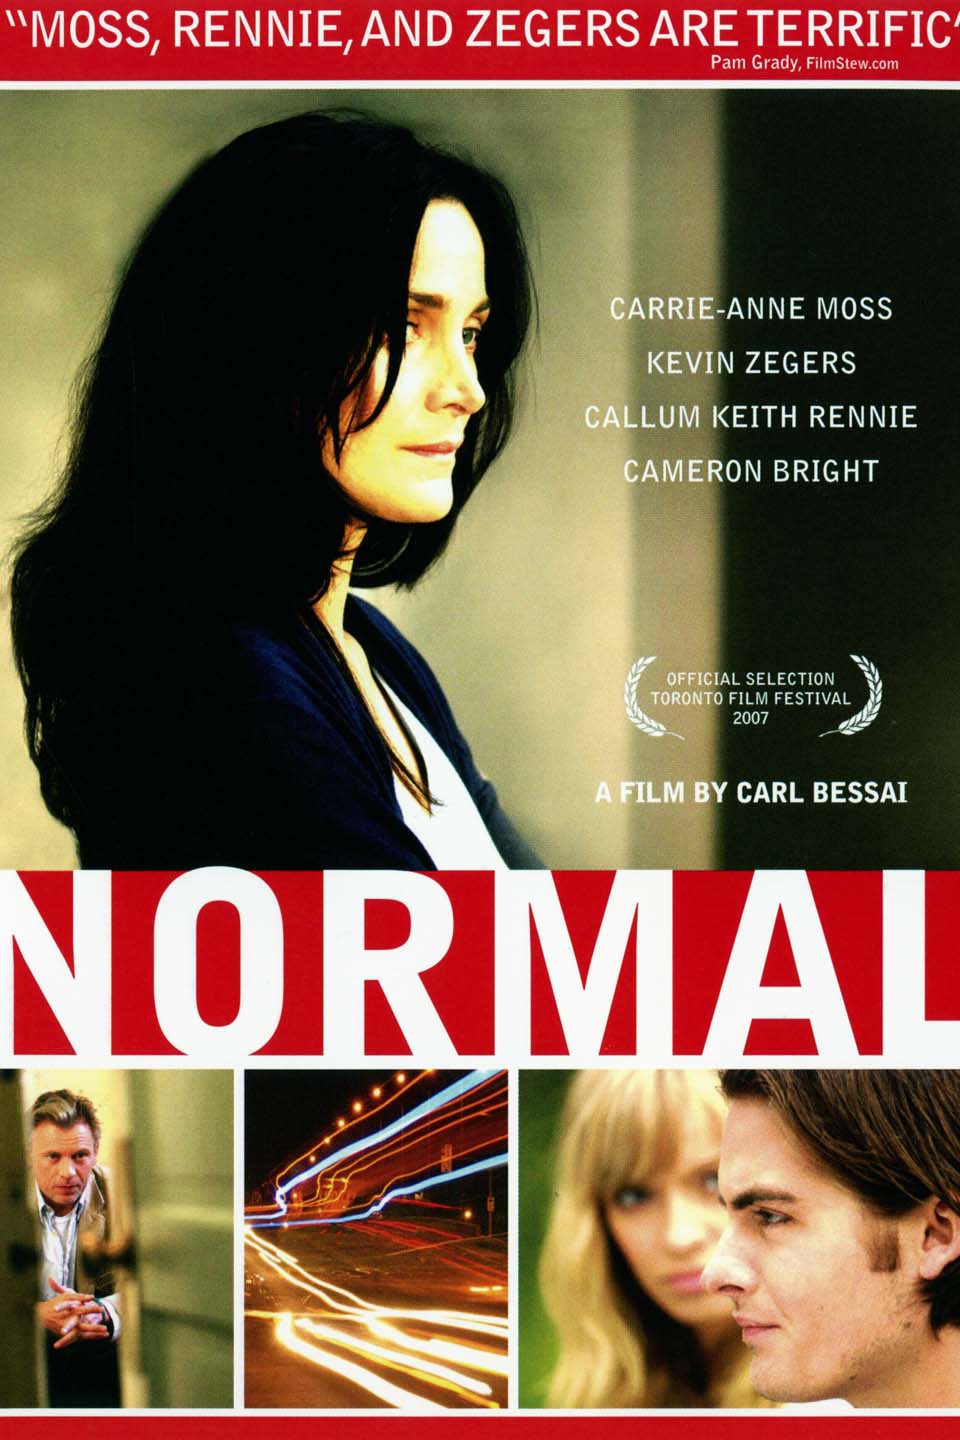 Normal by Carl Bessai